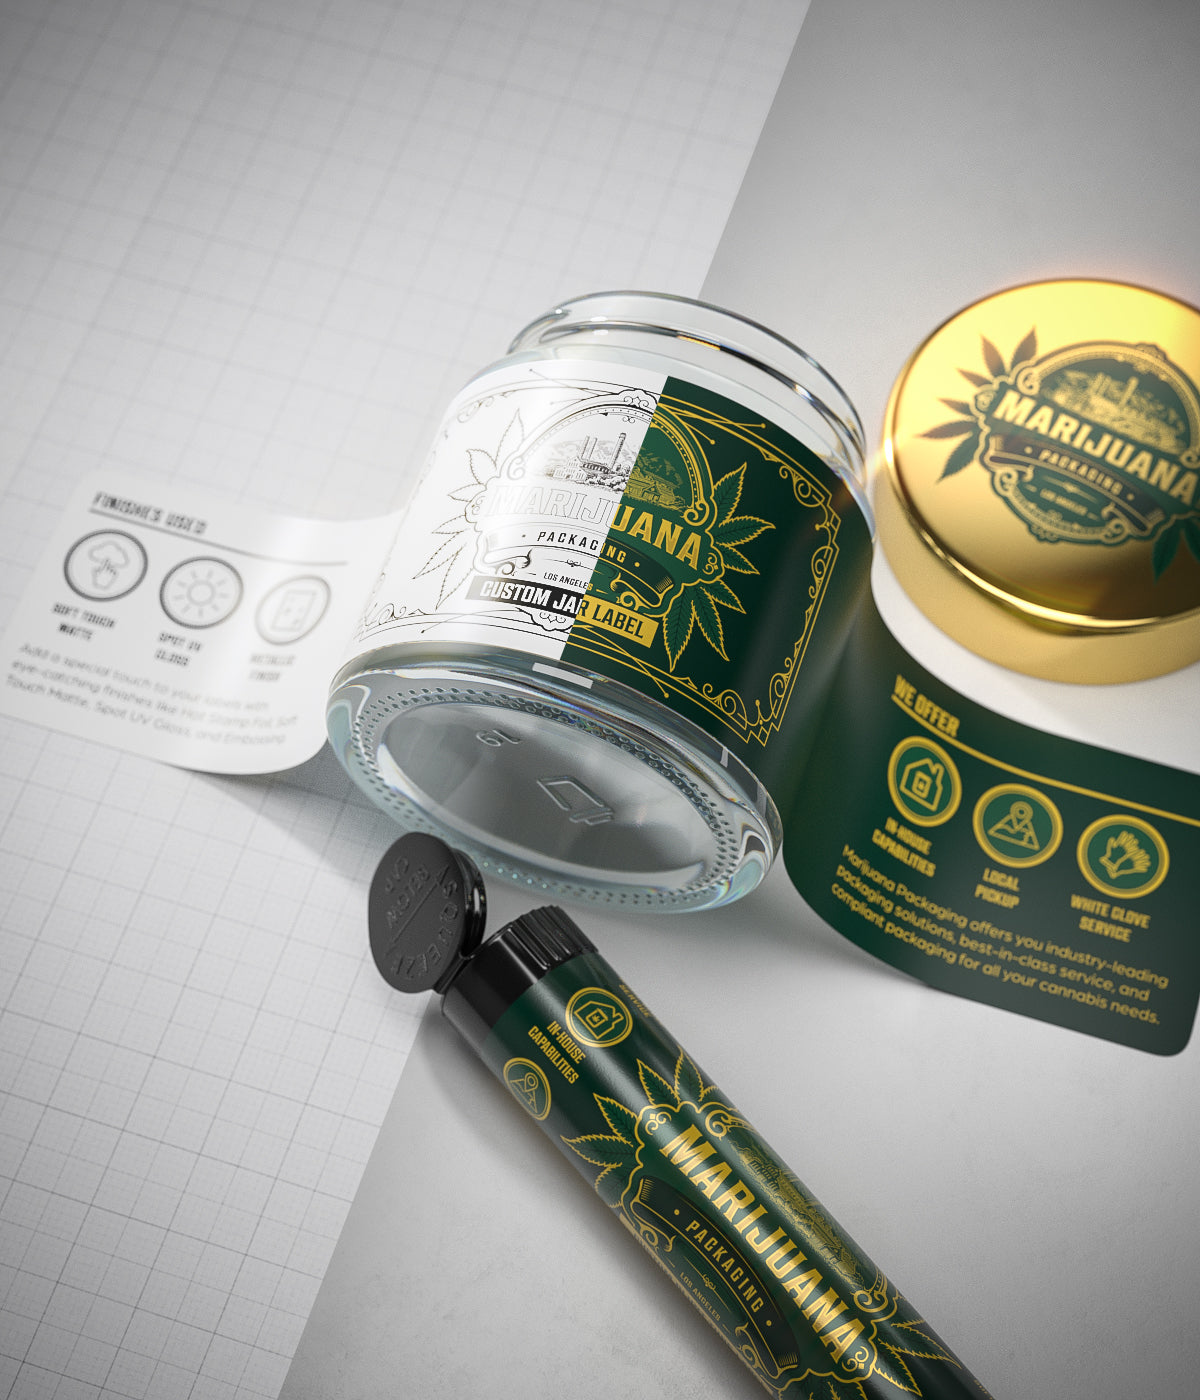 Custom Cannabis Packaging, Packaging For Marijuana